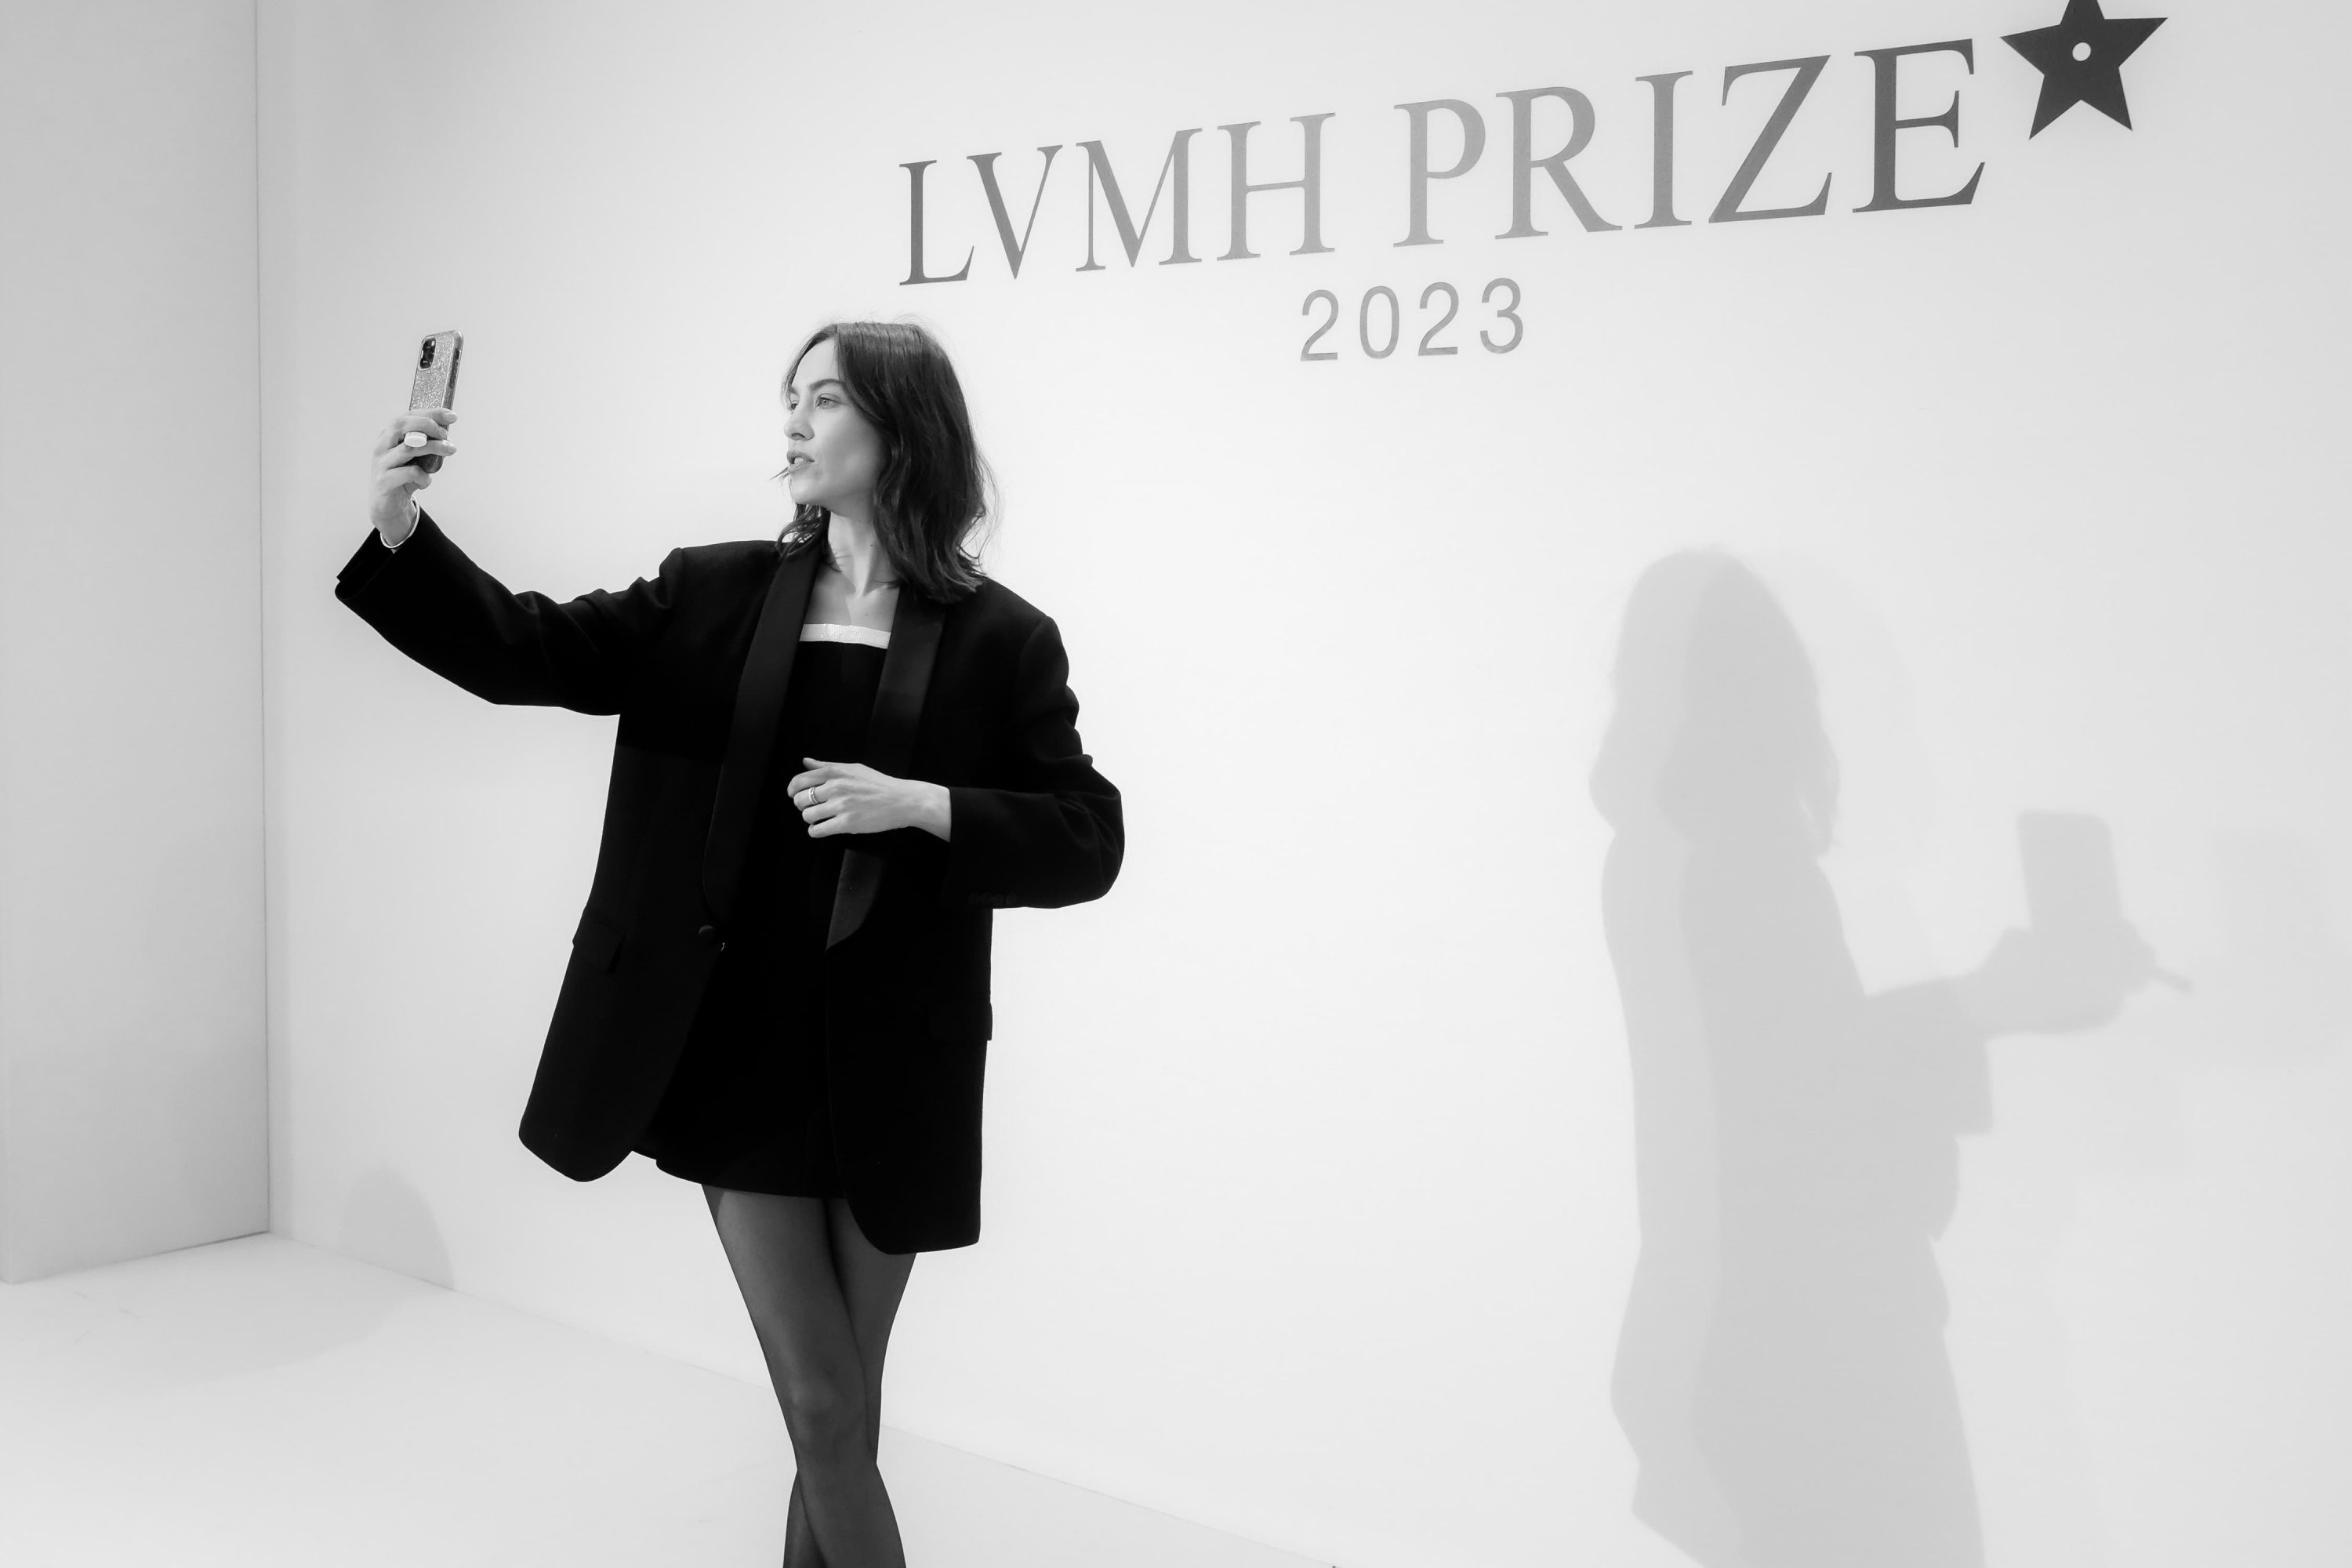 LVMH Prize 2023 Cocktail Reception